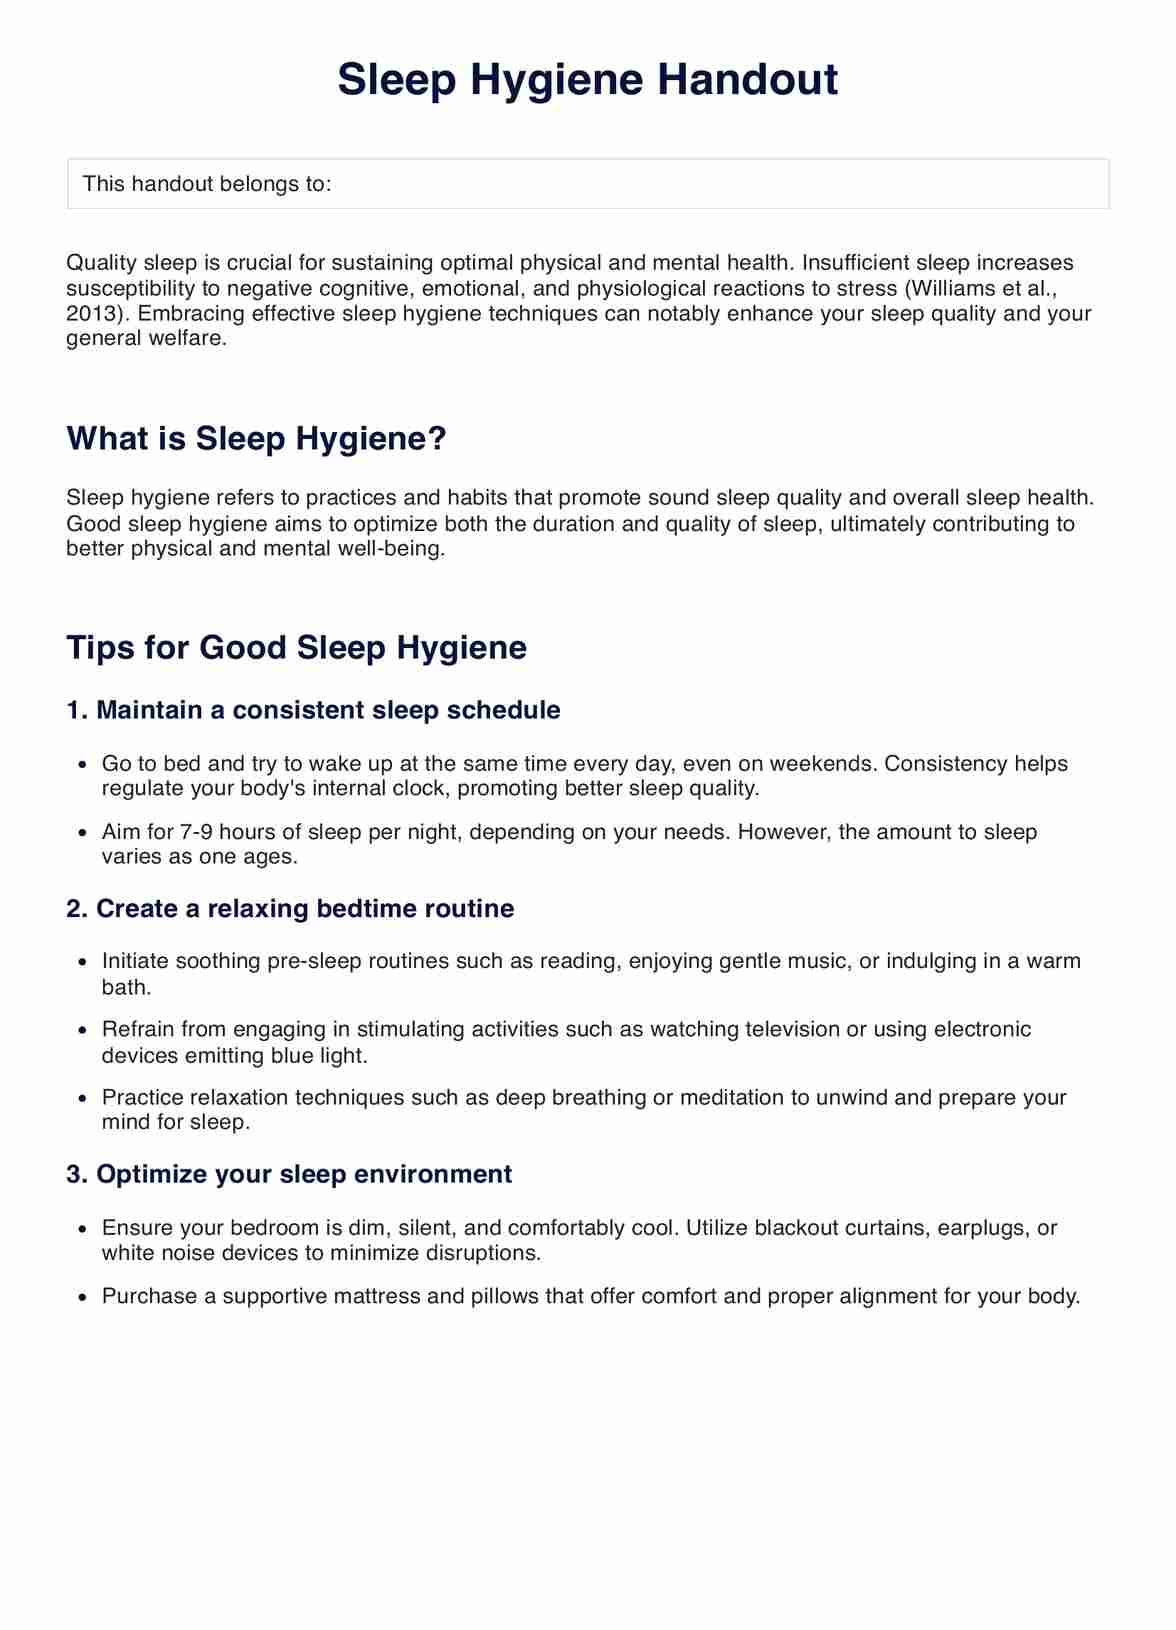 Sleep Hygiene Handout PDF Example